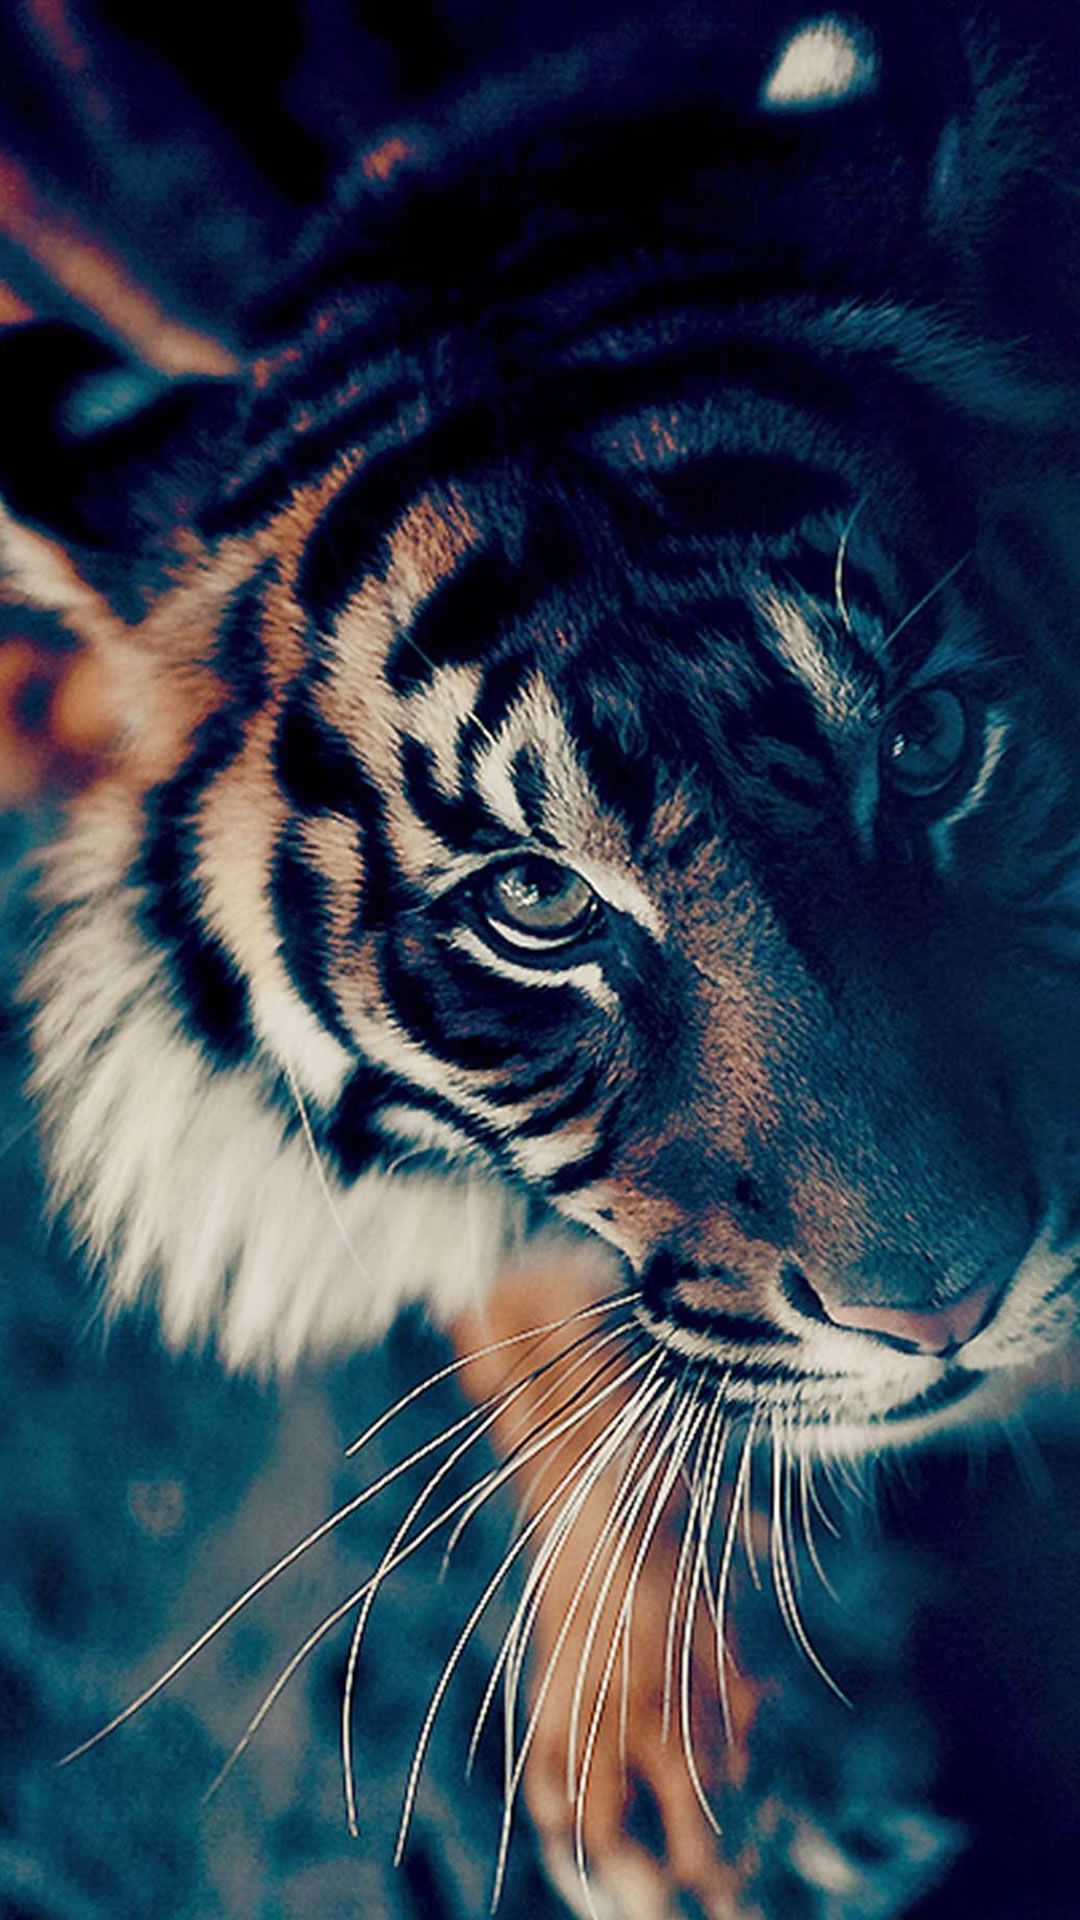 Bengal Tiger Closeup IPhone 6 Wallpaper Download. IPhone Wallpaper, IPad Wallpaper One Stop Download. Tiger Wallpaper, Animal Wallpaper, Animals